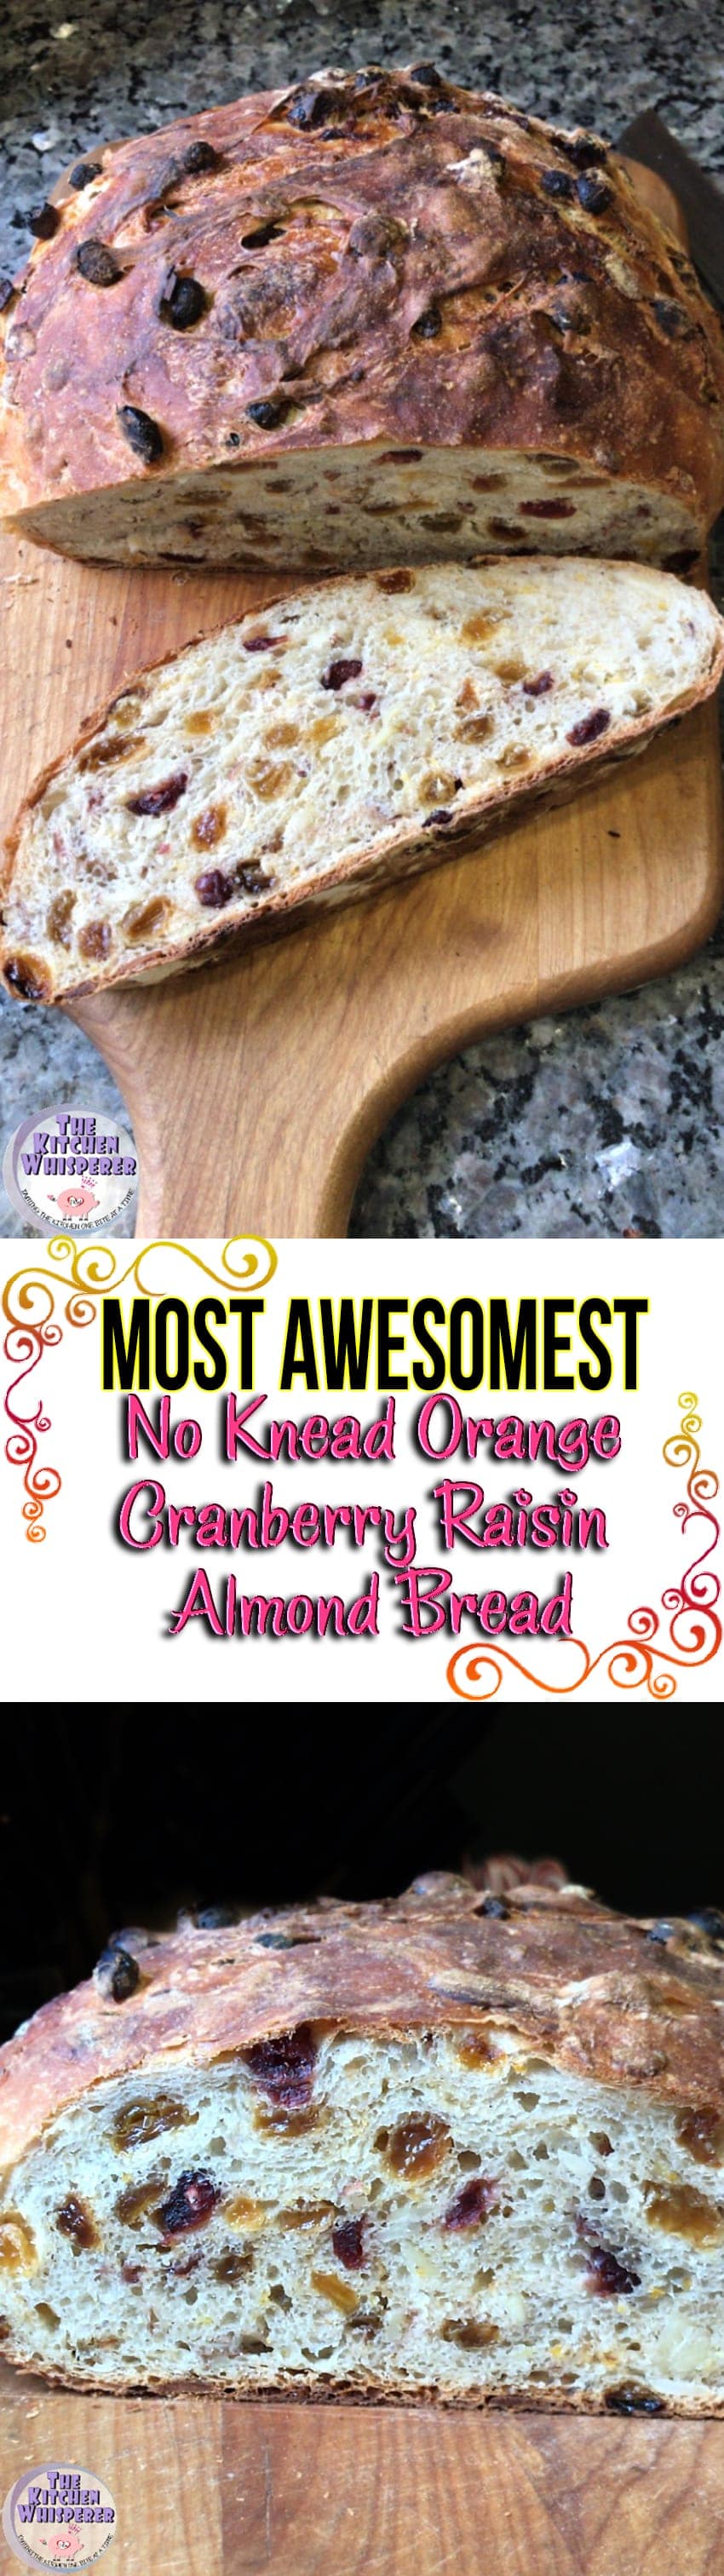 Most Awesomest No Knead Orange Cranberry Raisin Almond Bread